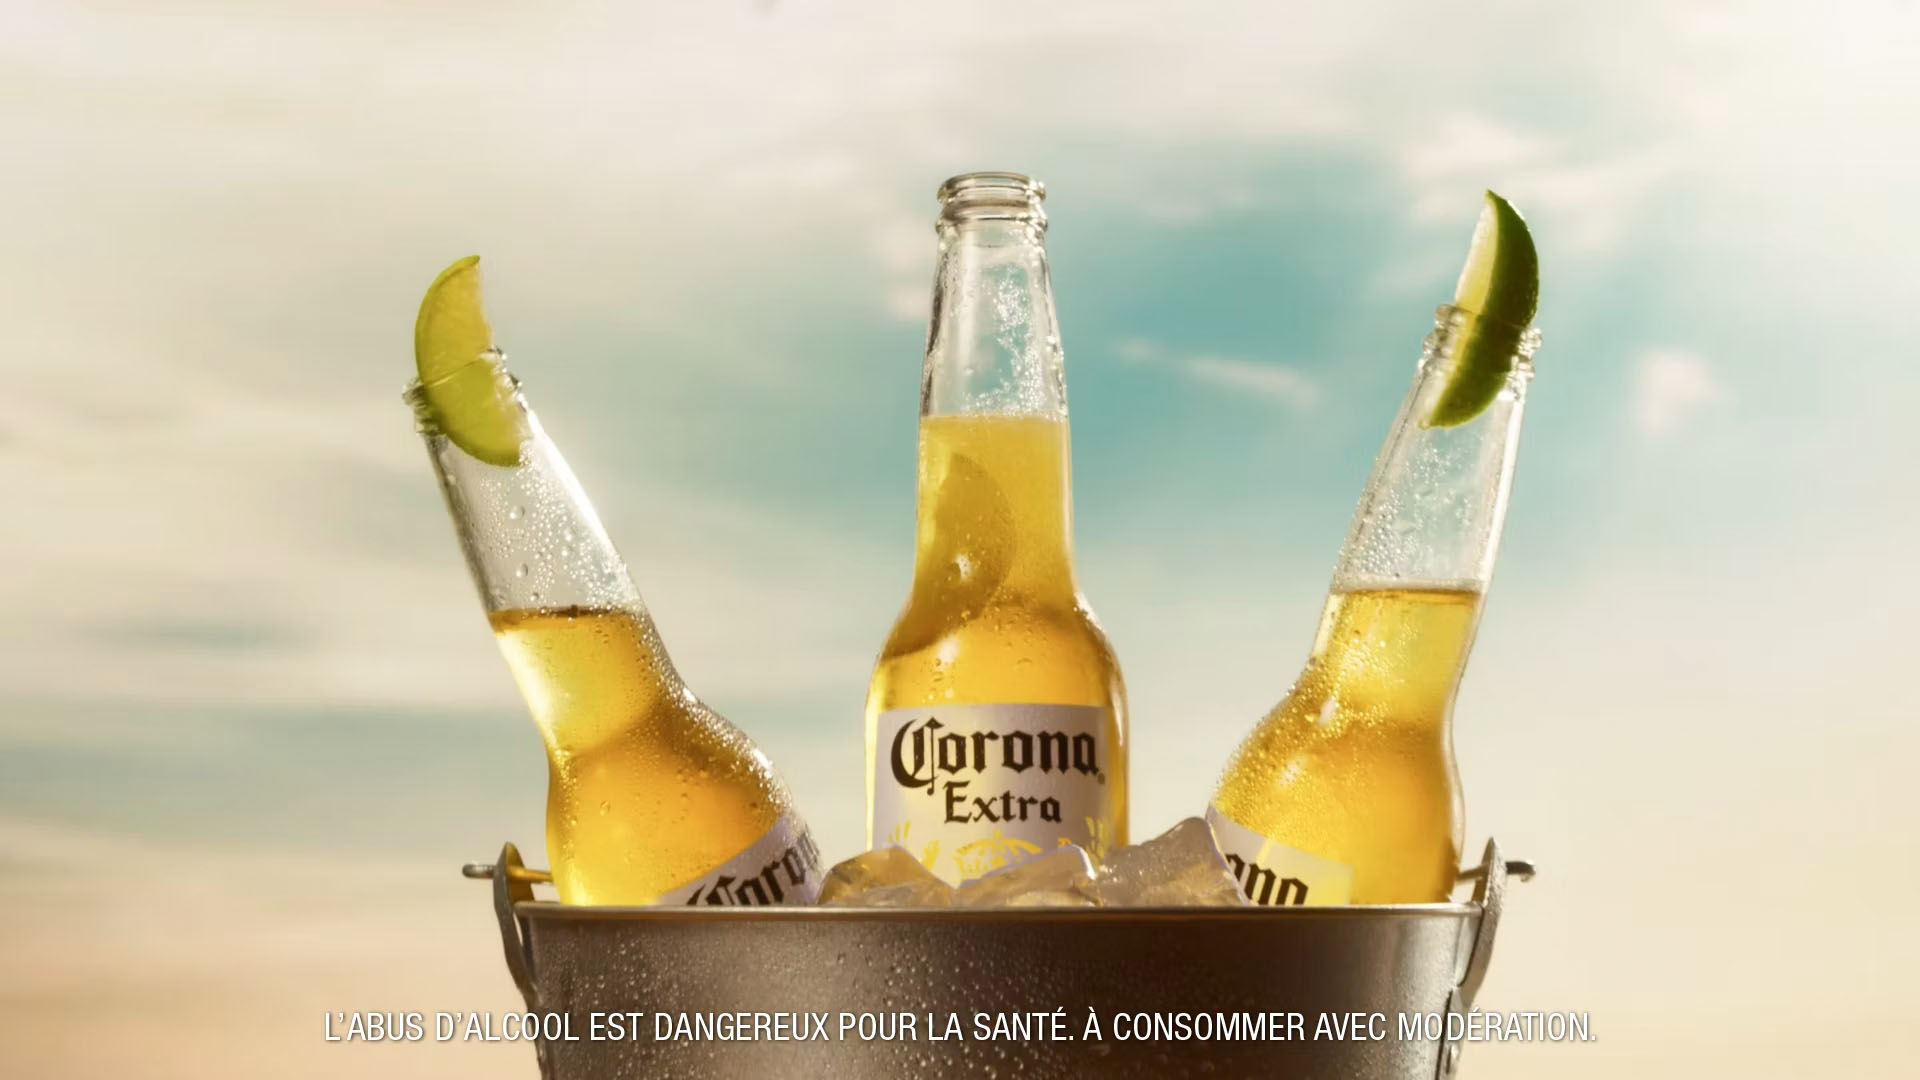 Advertising Liquids Film of Corona Beer